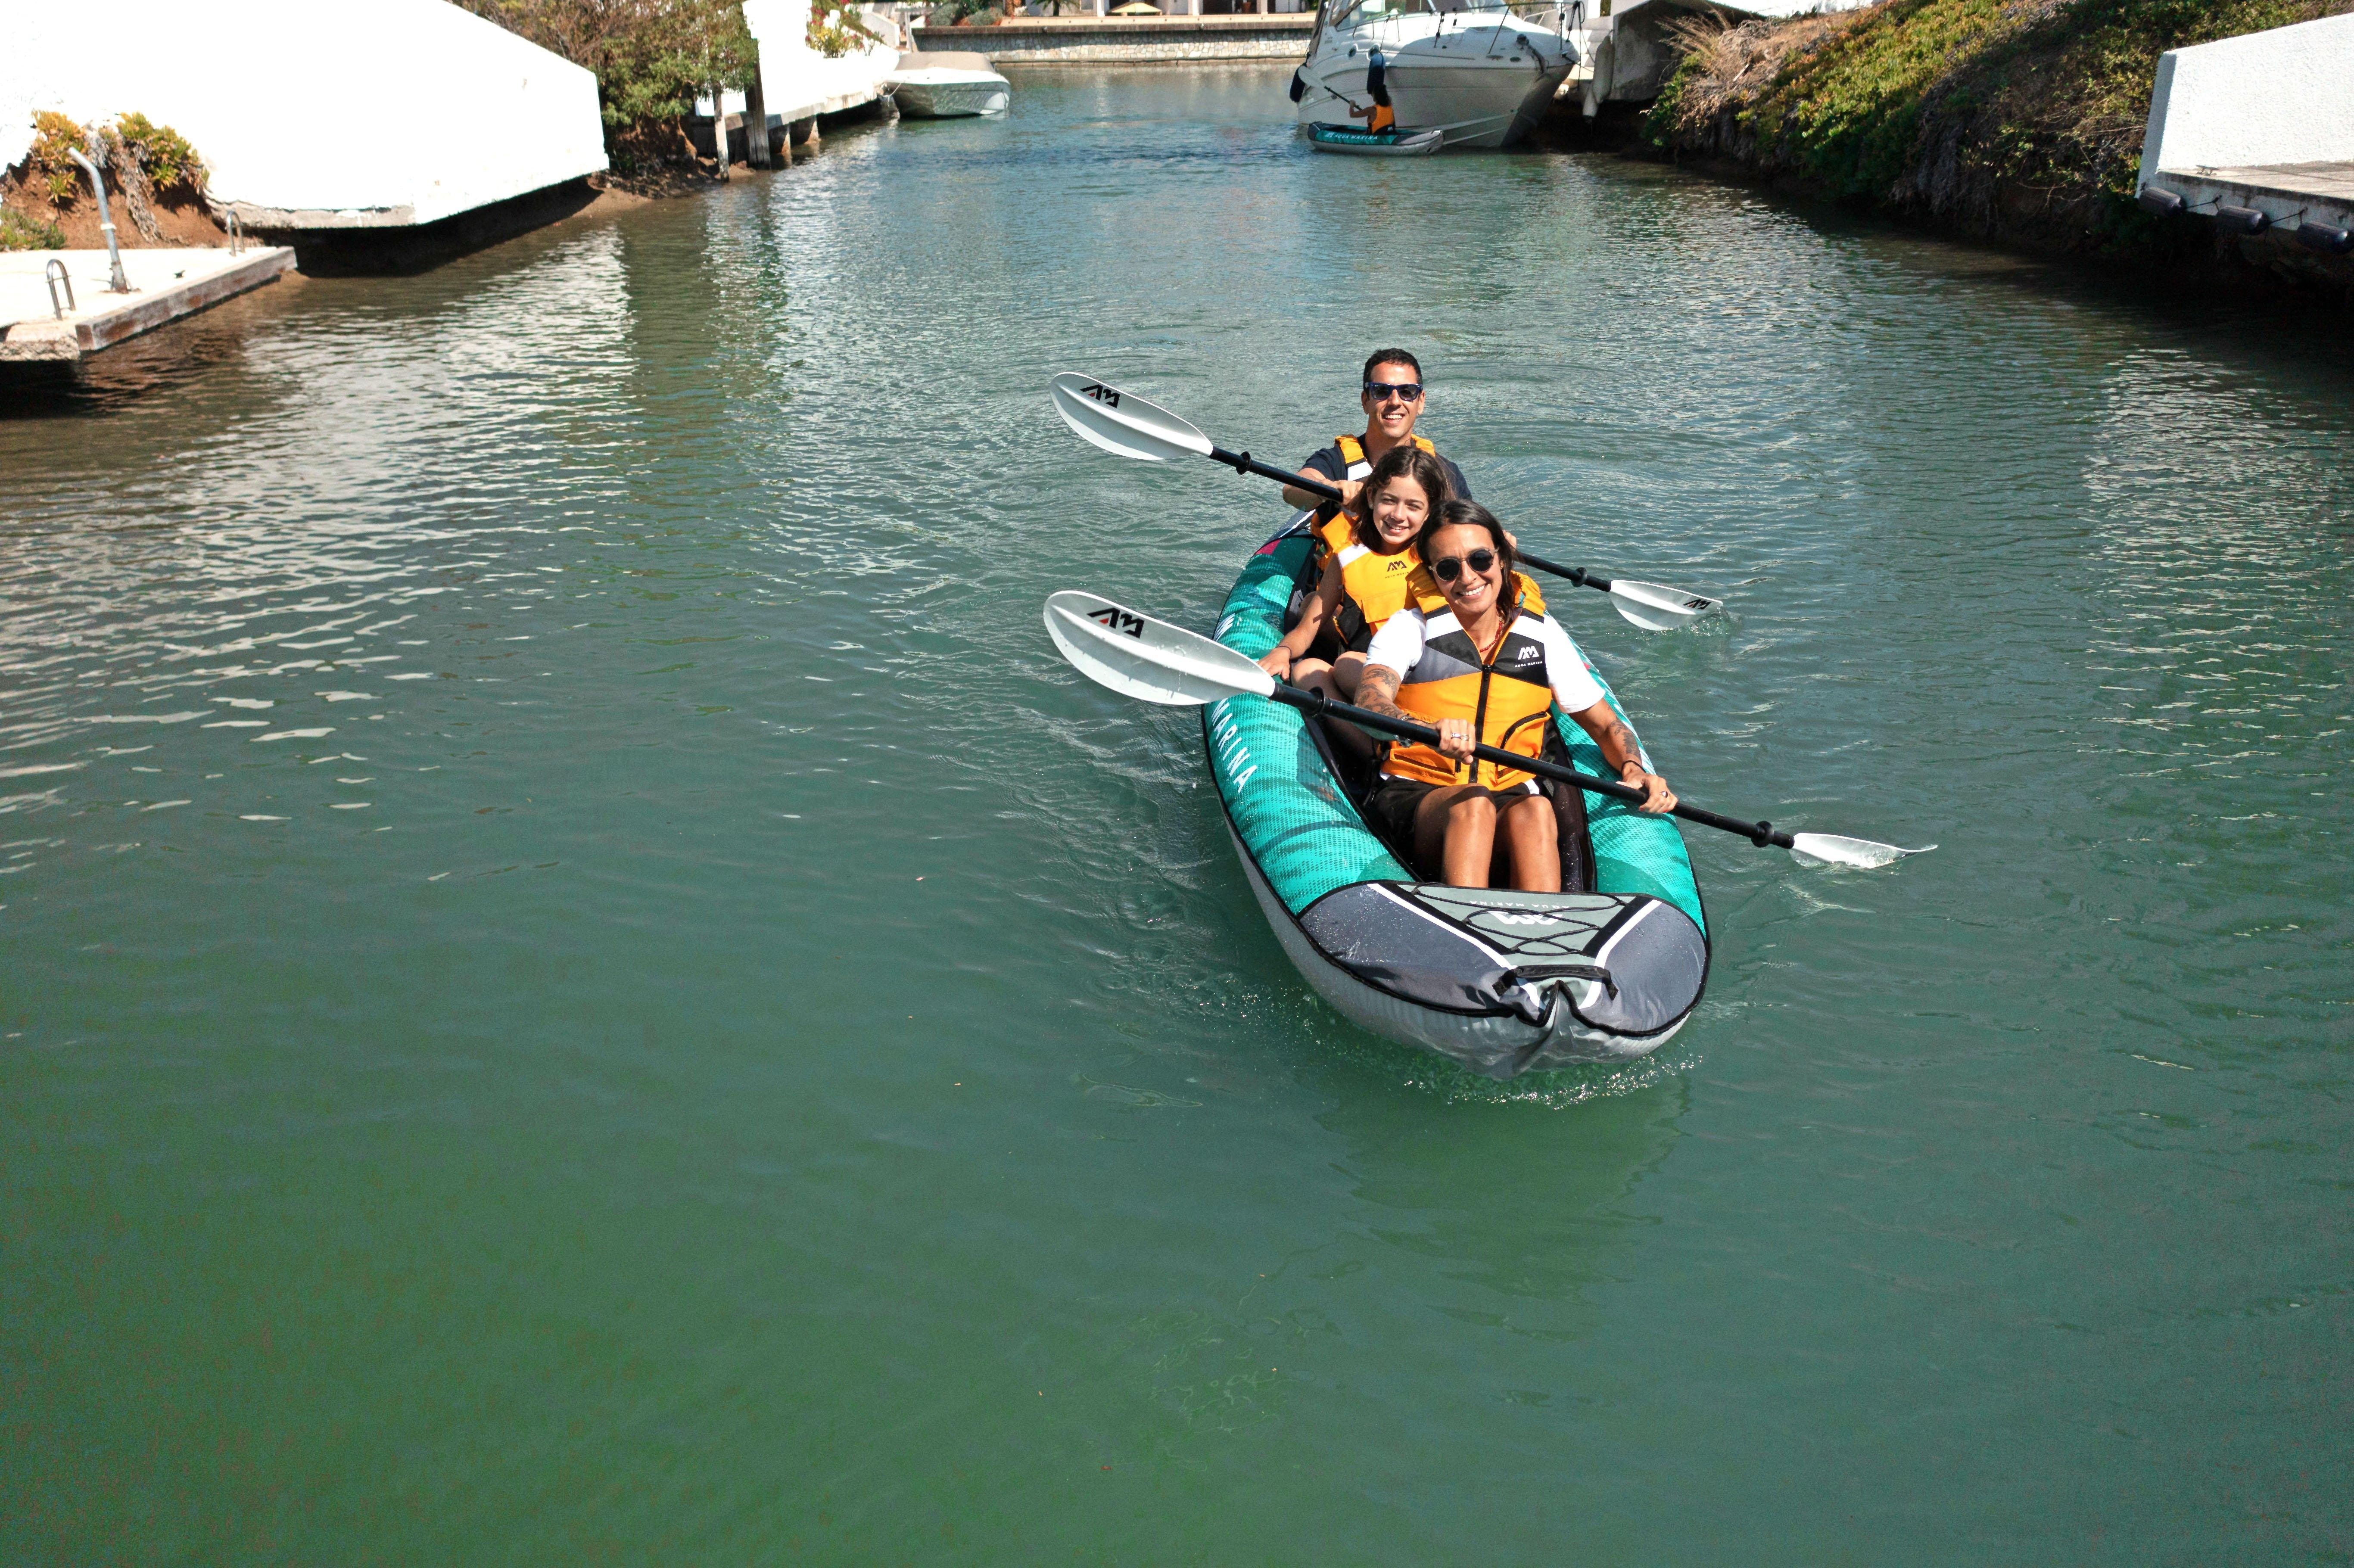 Laxo 380 Leisure 3-Person Kayak - Dti Direct USA